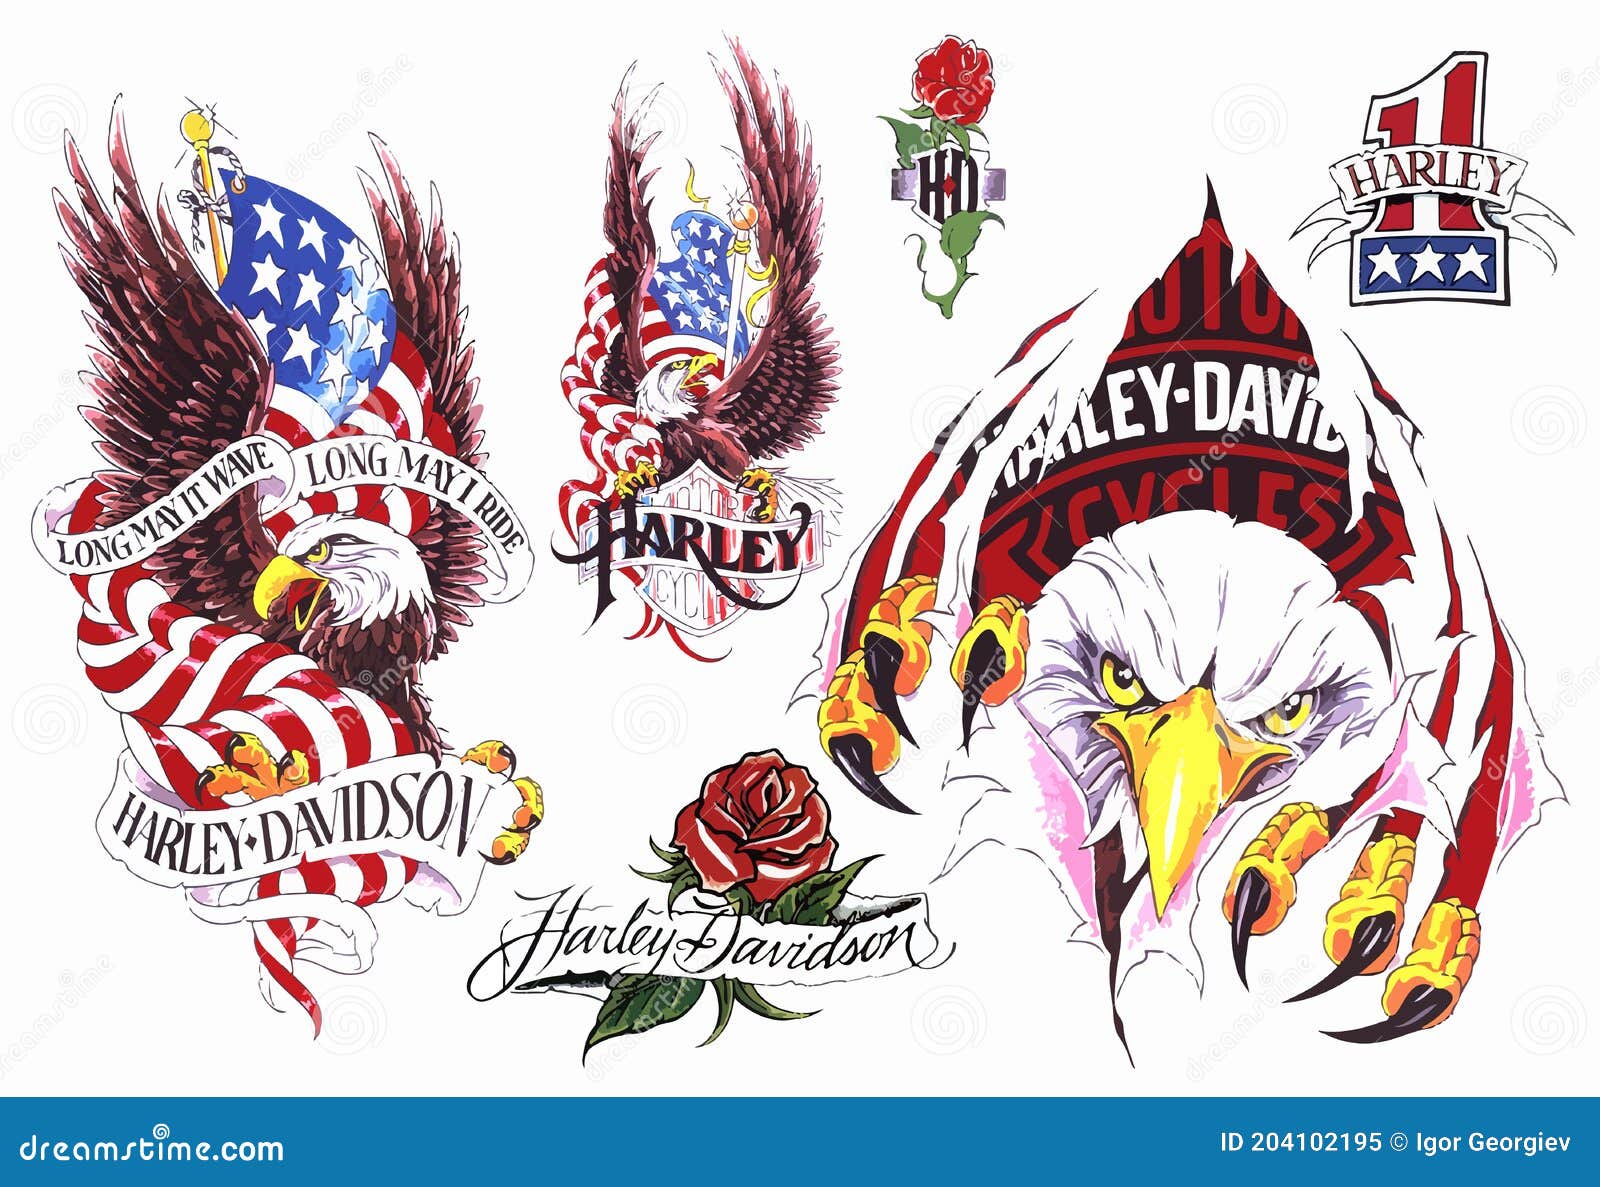 Harley Davidson tattoos ! Wear... - Quayside Tattoo Company | Facebook